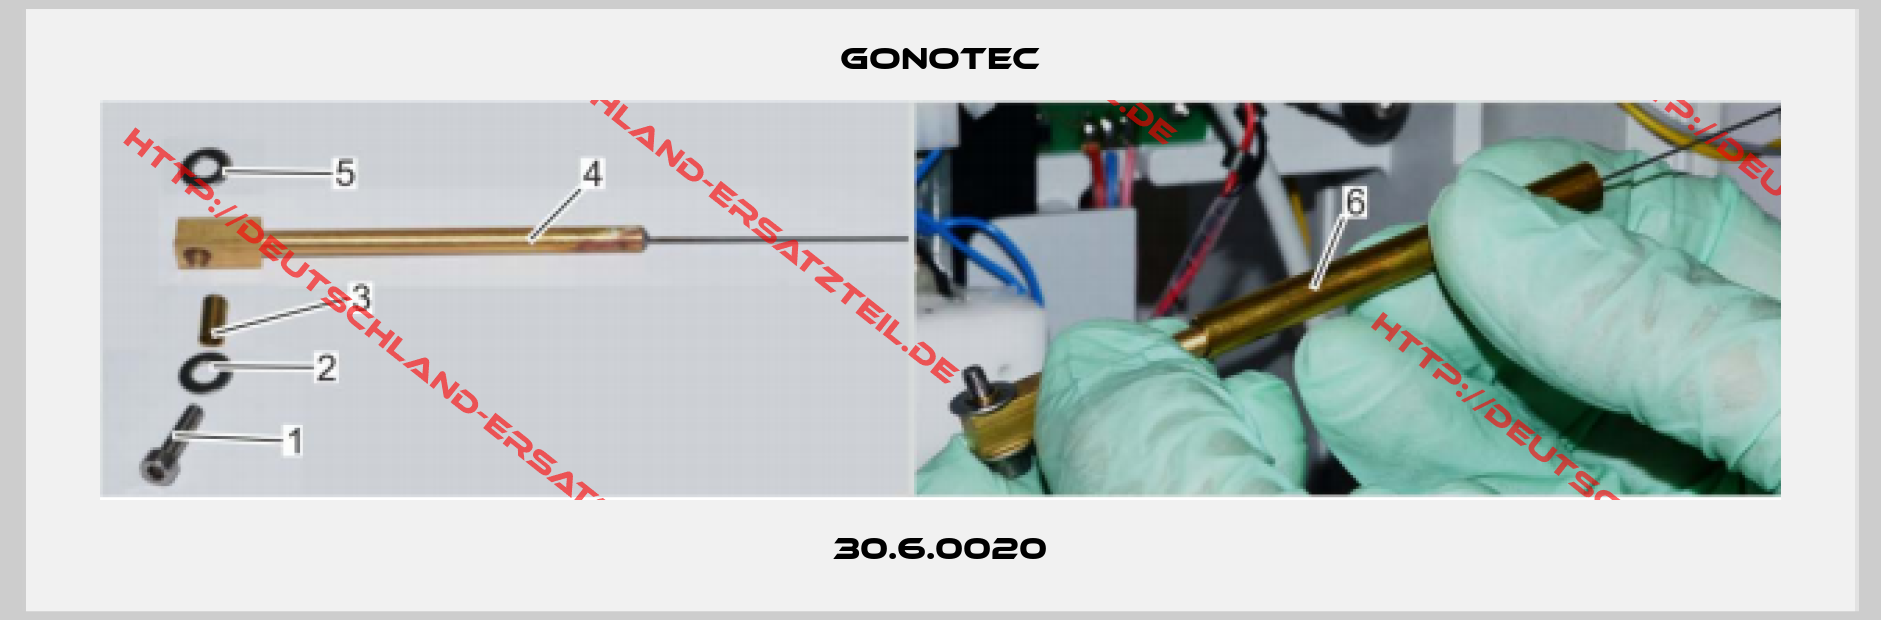 Gonotec-30.6.0020